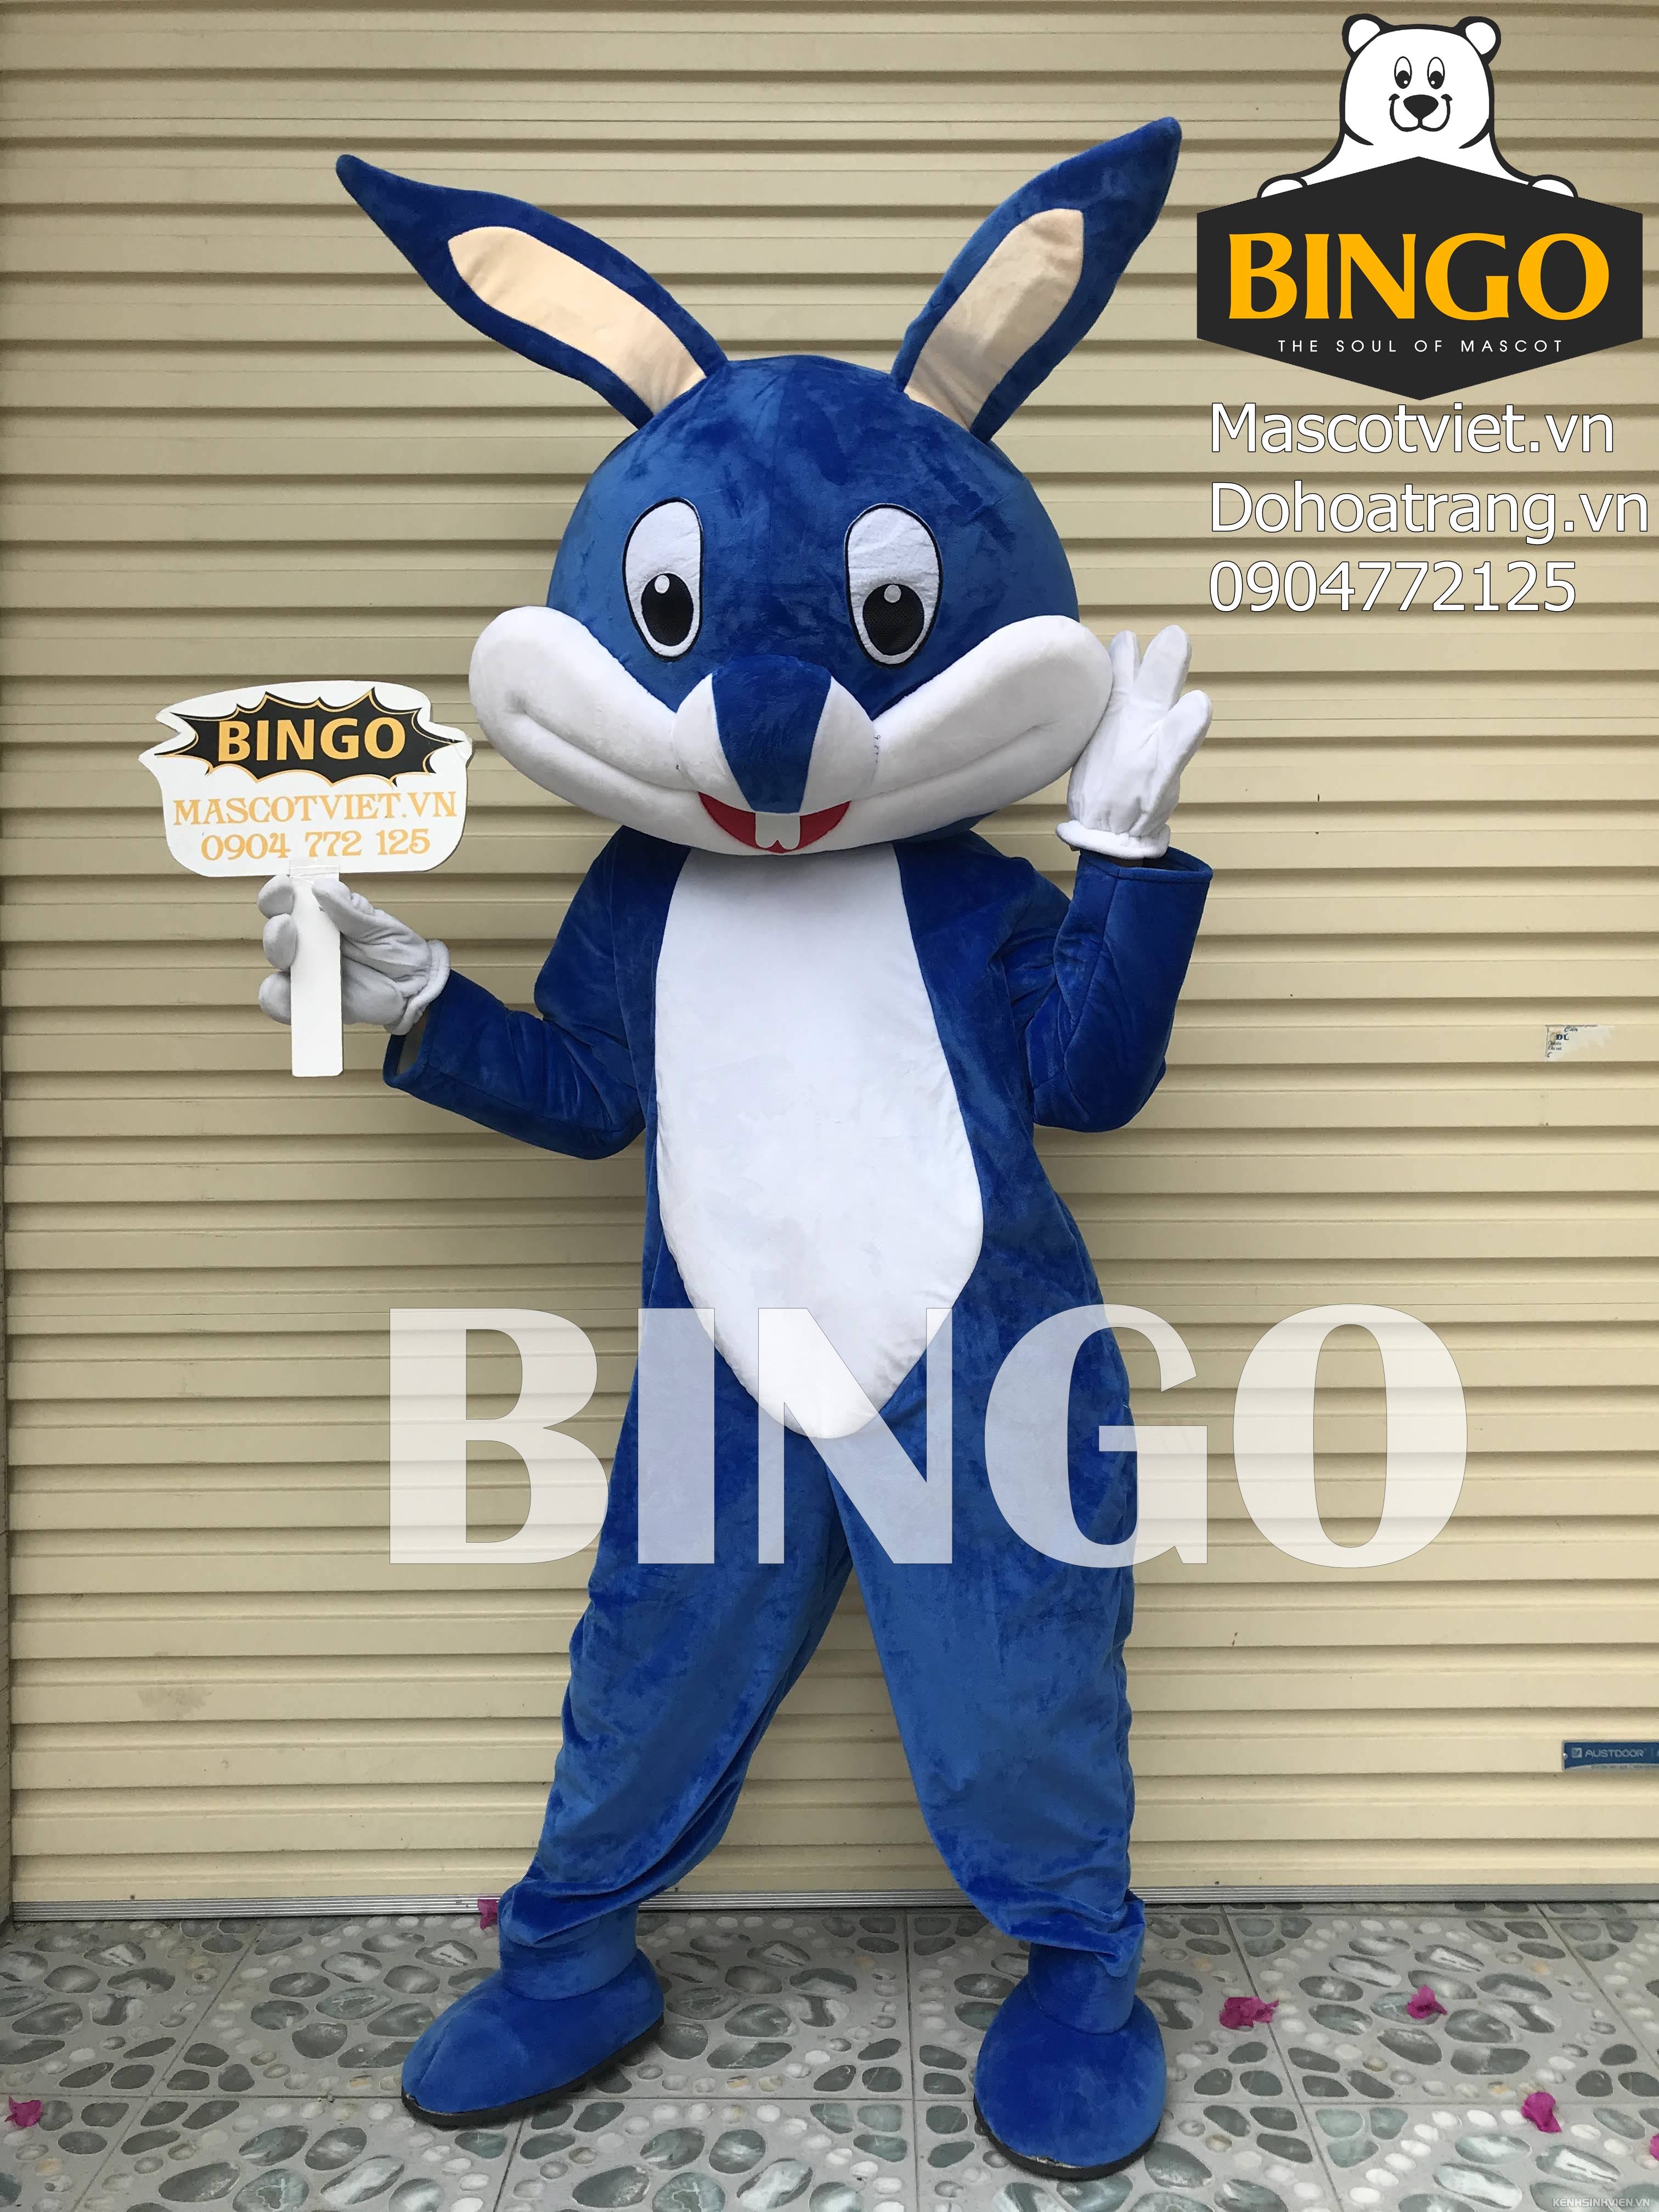 mascot-con-tho-xanh-bingo-costumes-0904772125.jpg